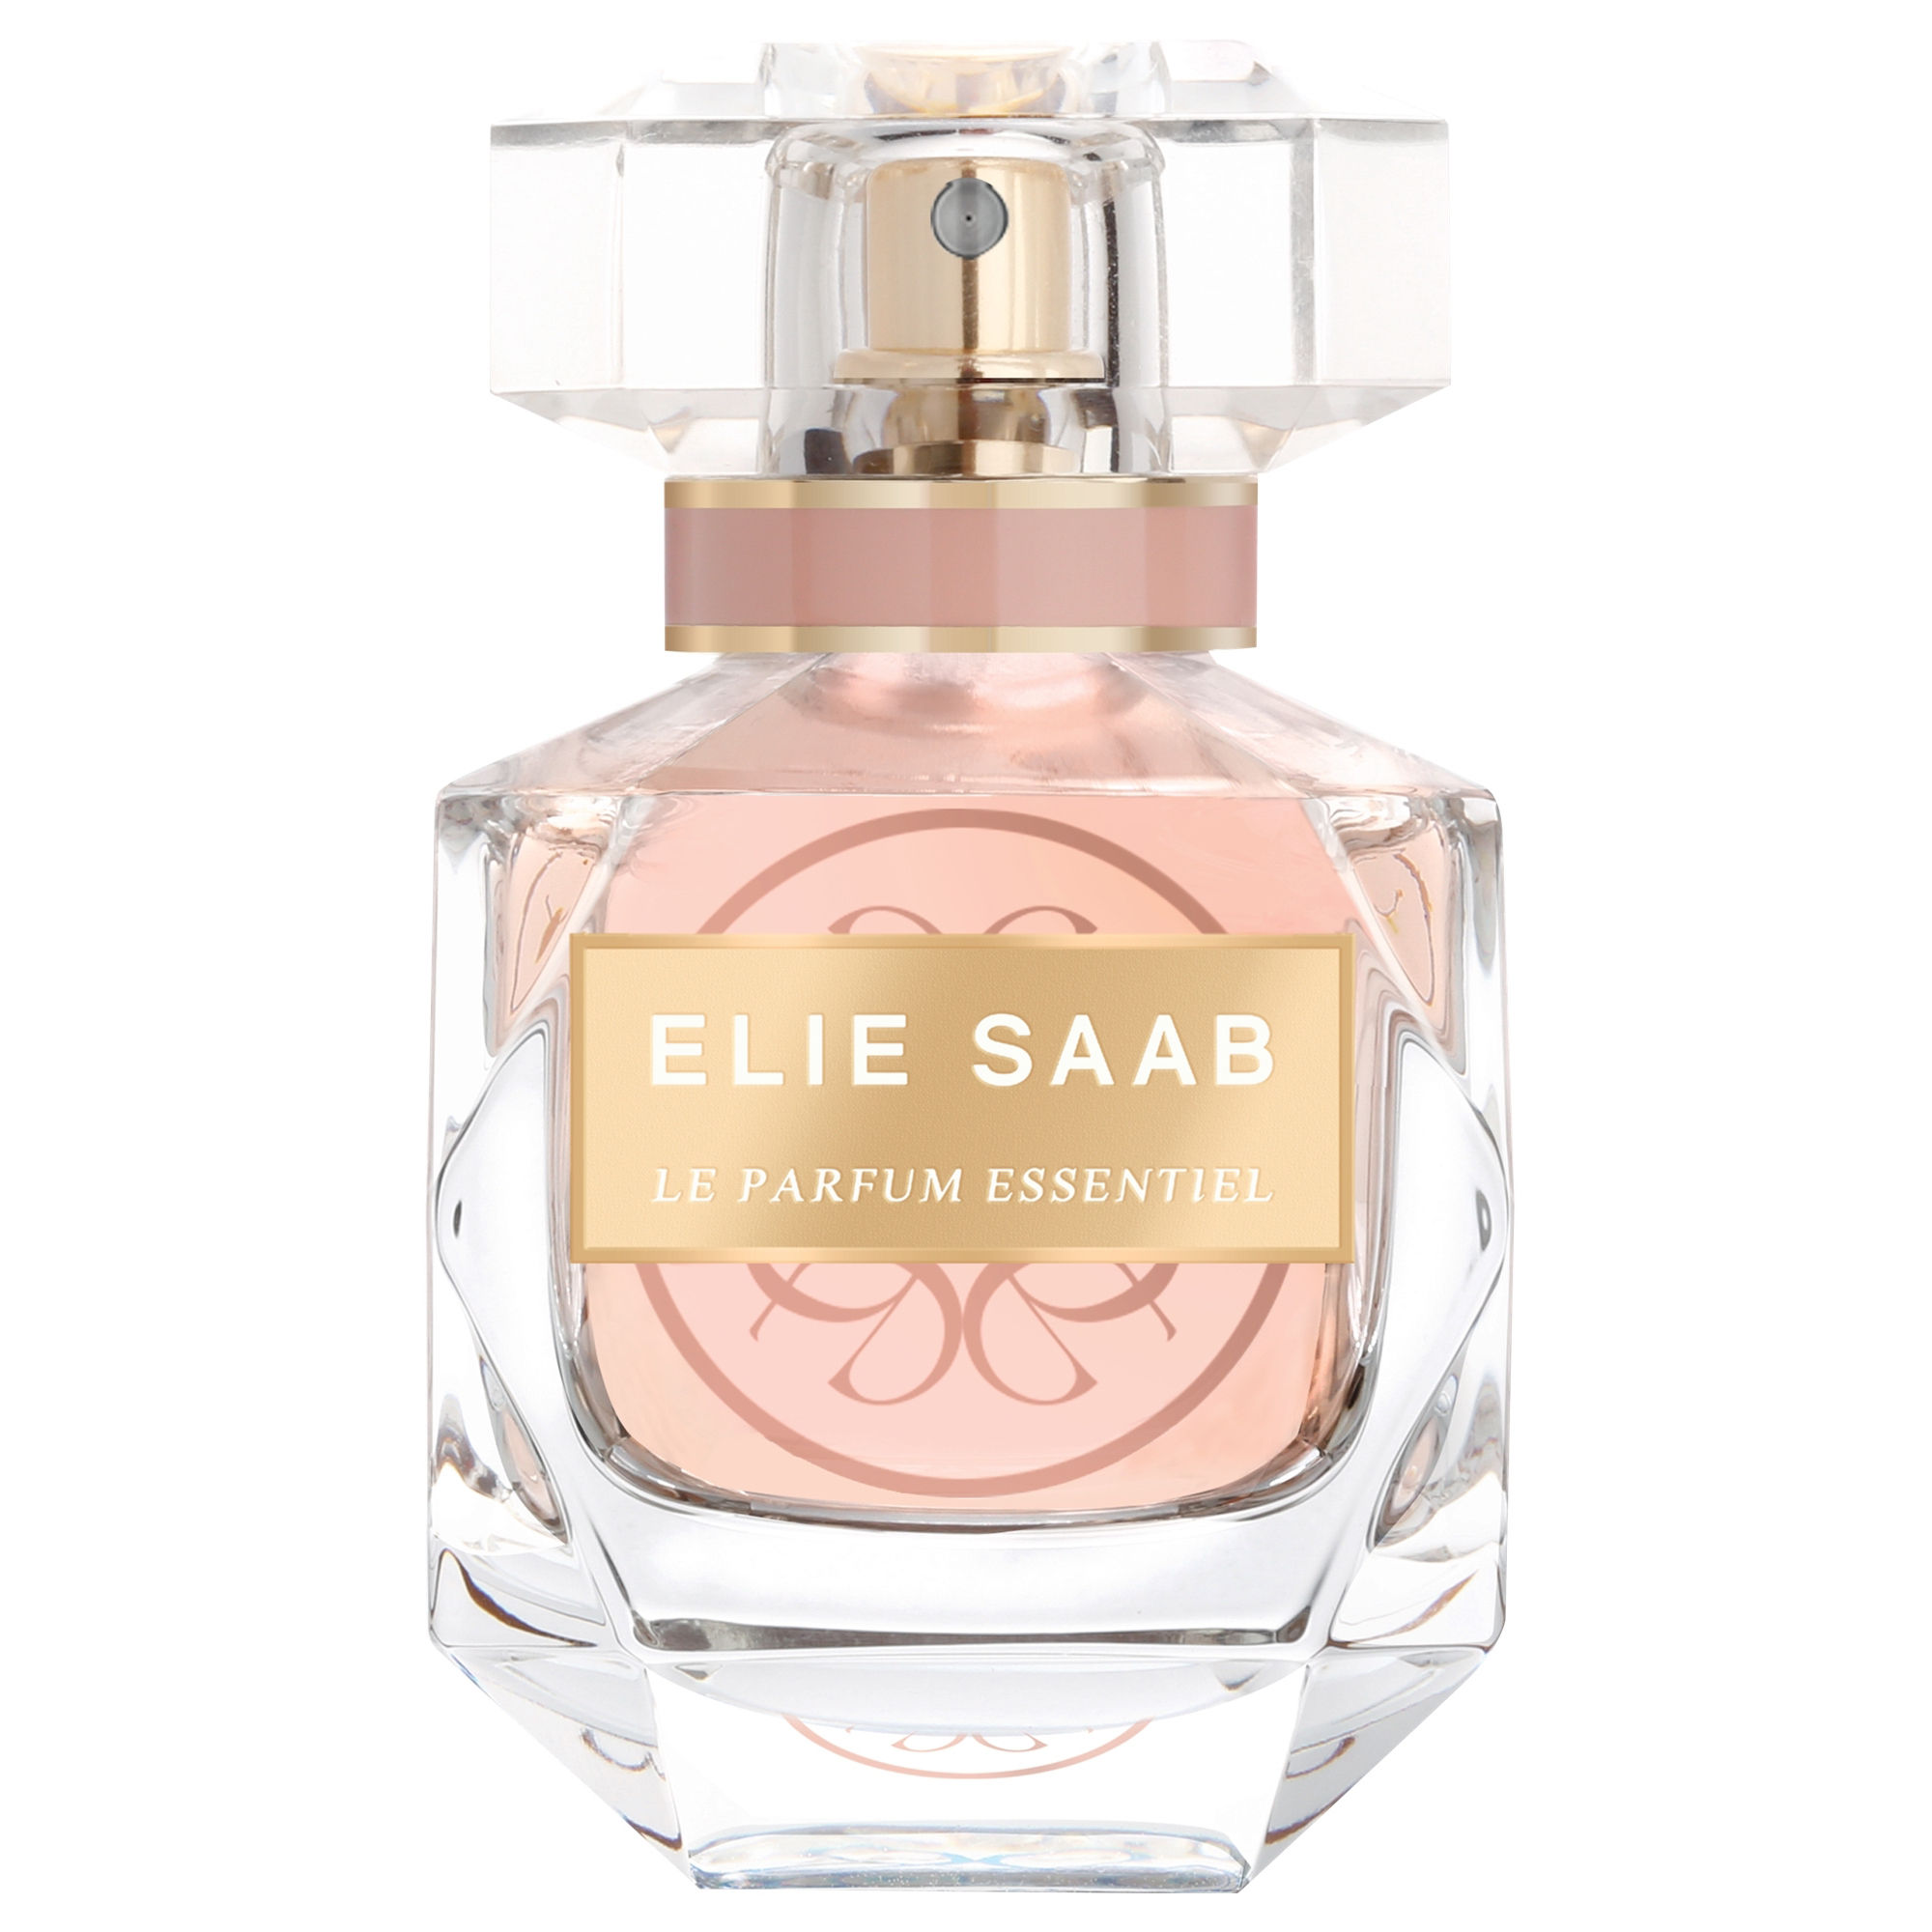 Elie Saab Le Parfum Essentiel Eau de parfum spray 30 ml